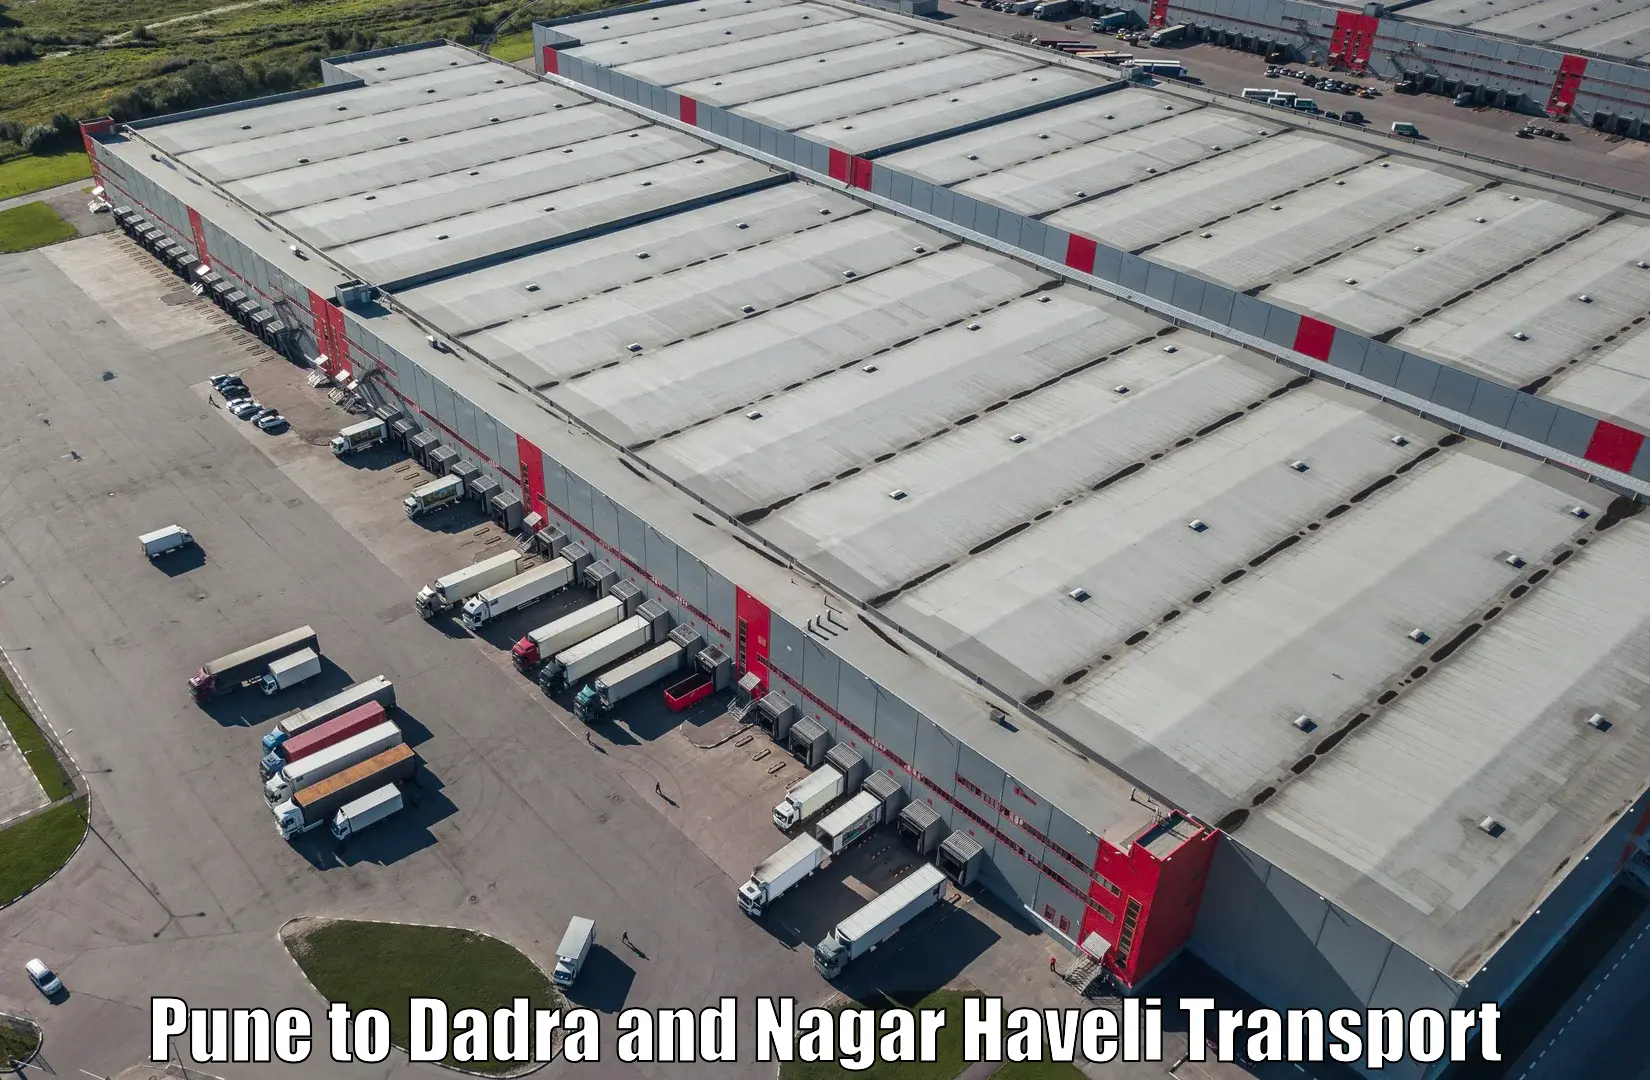 Logistics transportation services Pune to Silvassa